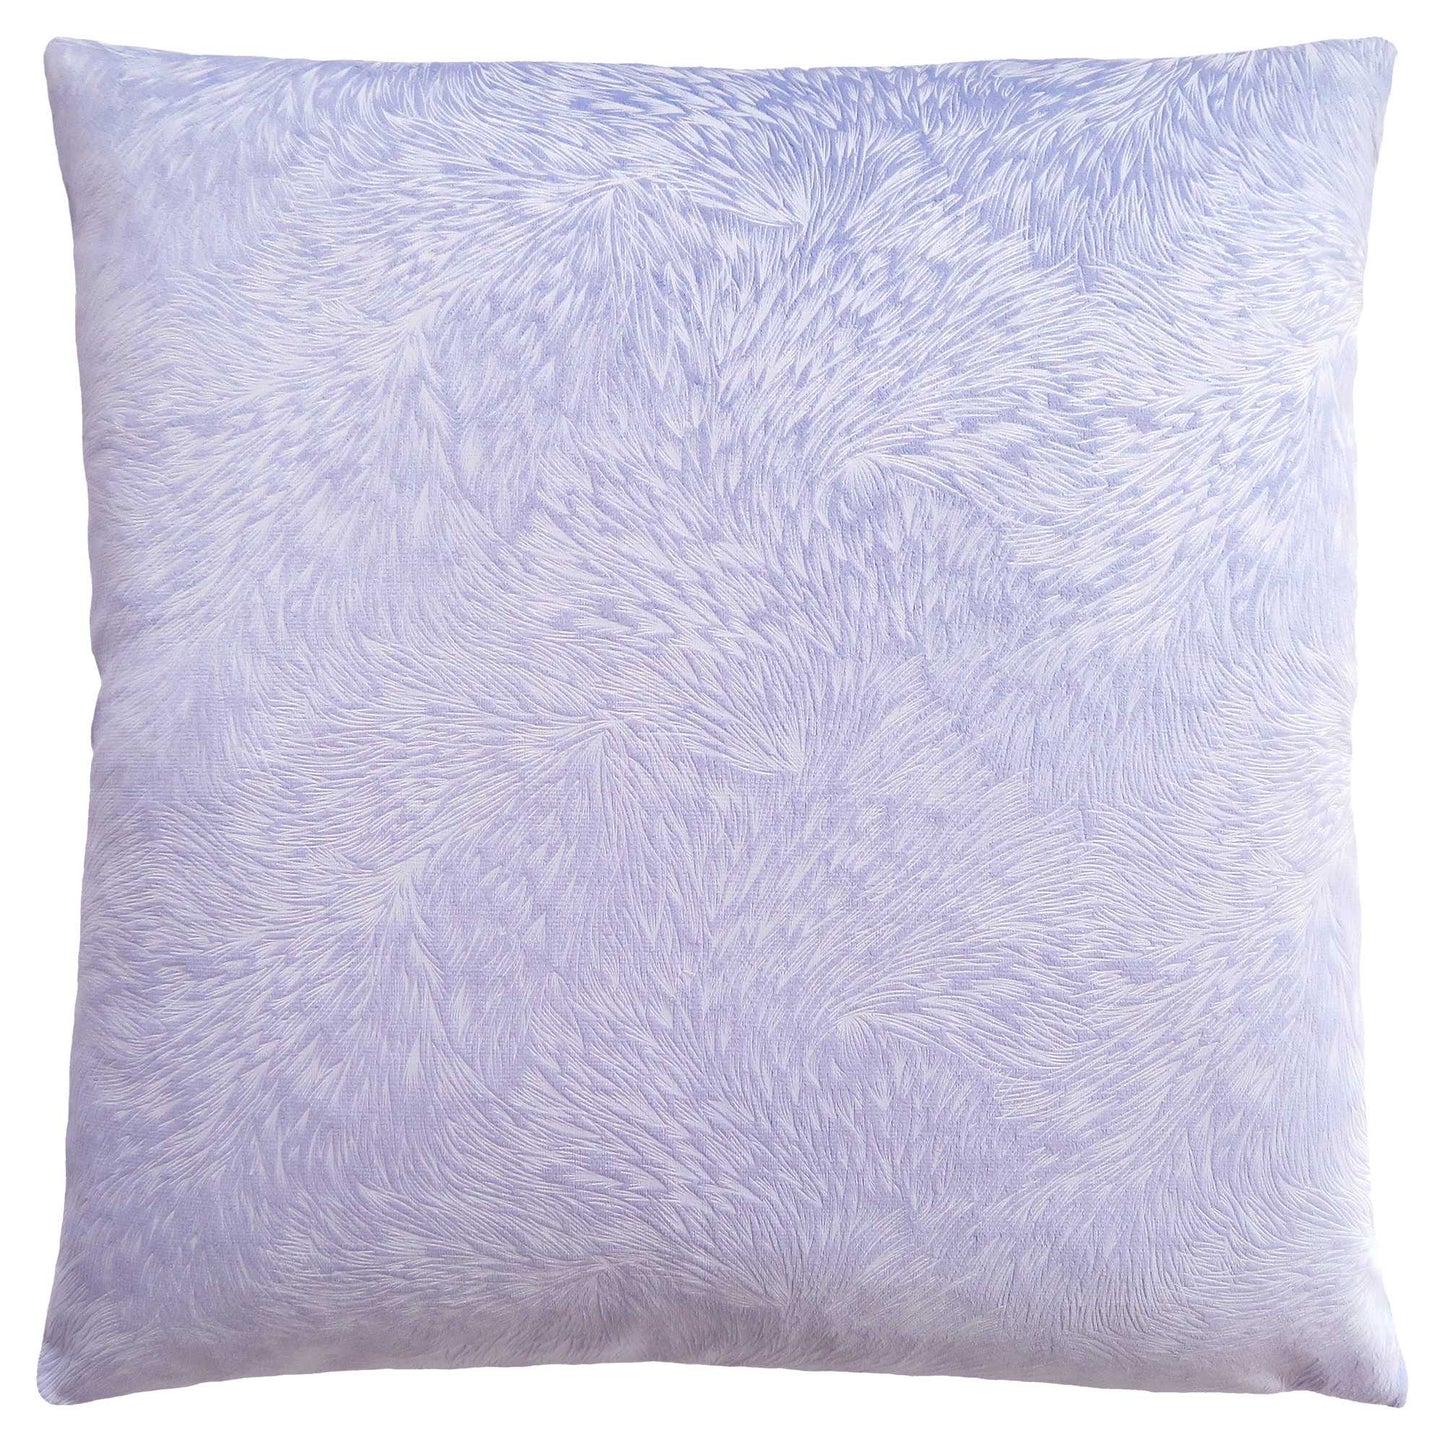 18" X 18" Light Gray Velvet Polyester Feather Zippered Pillow